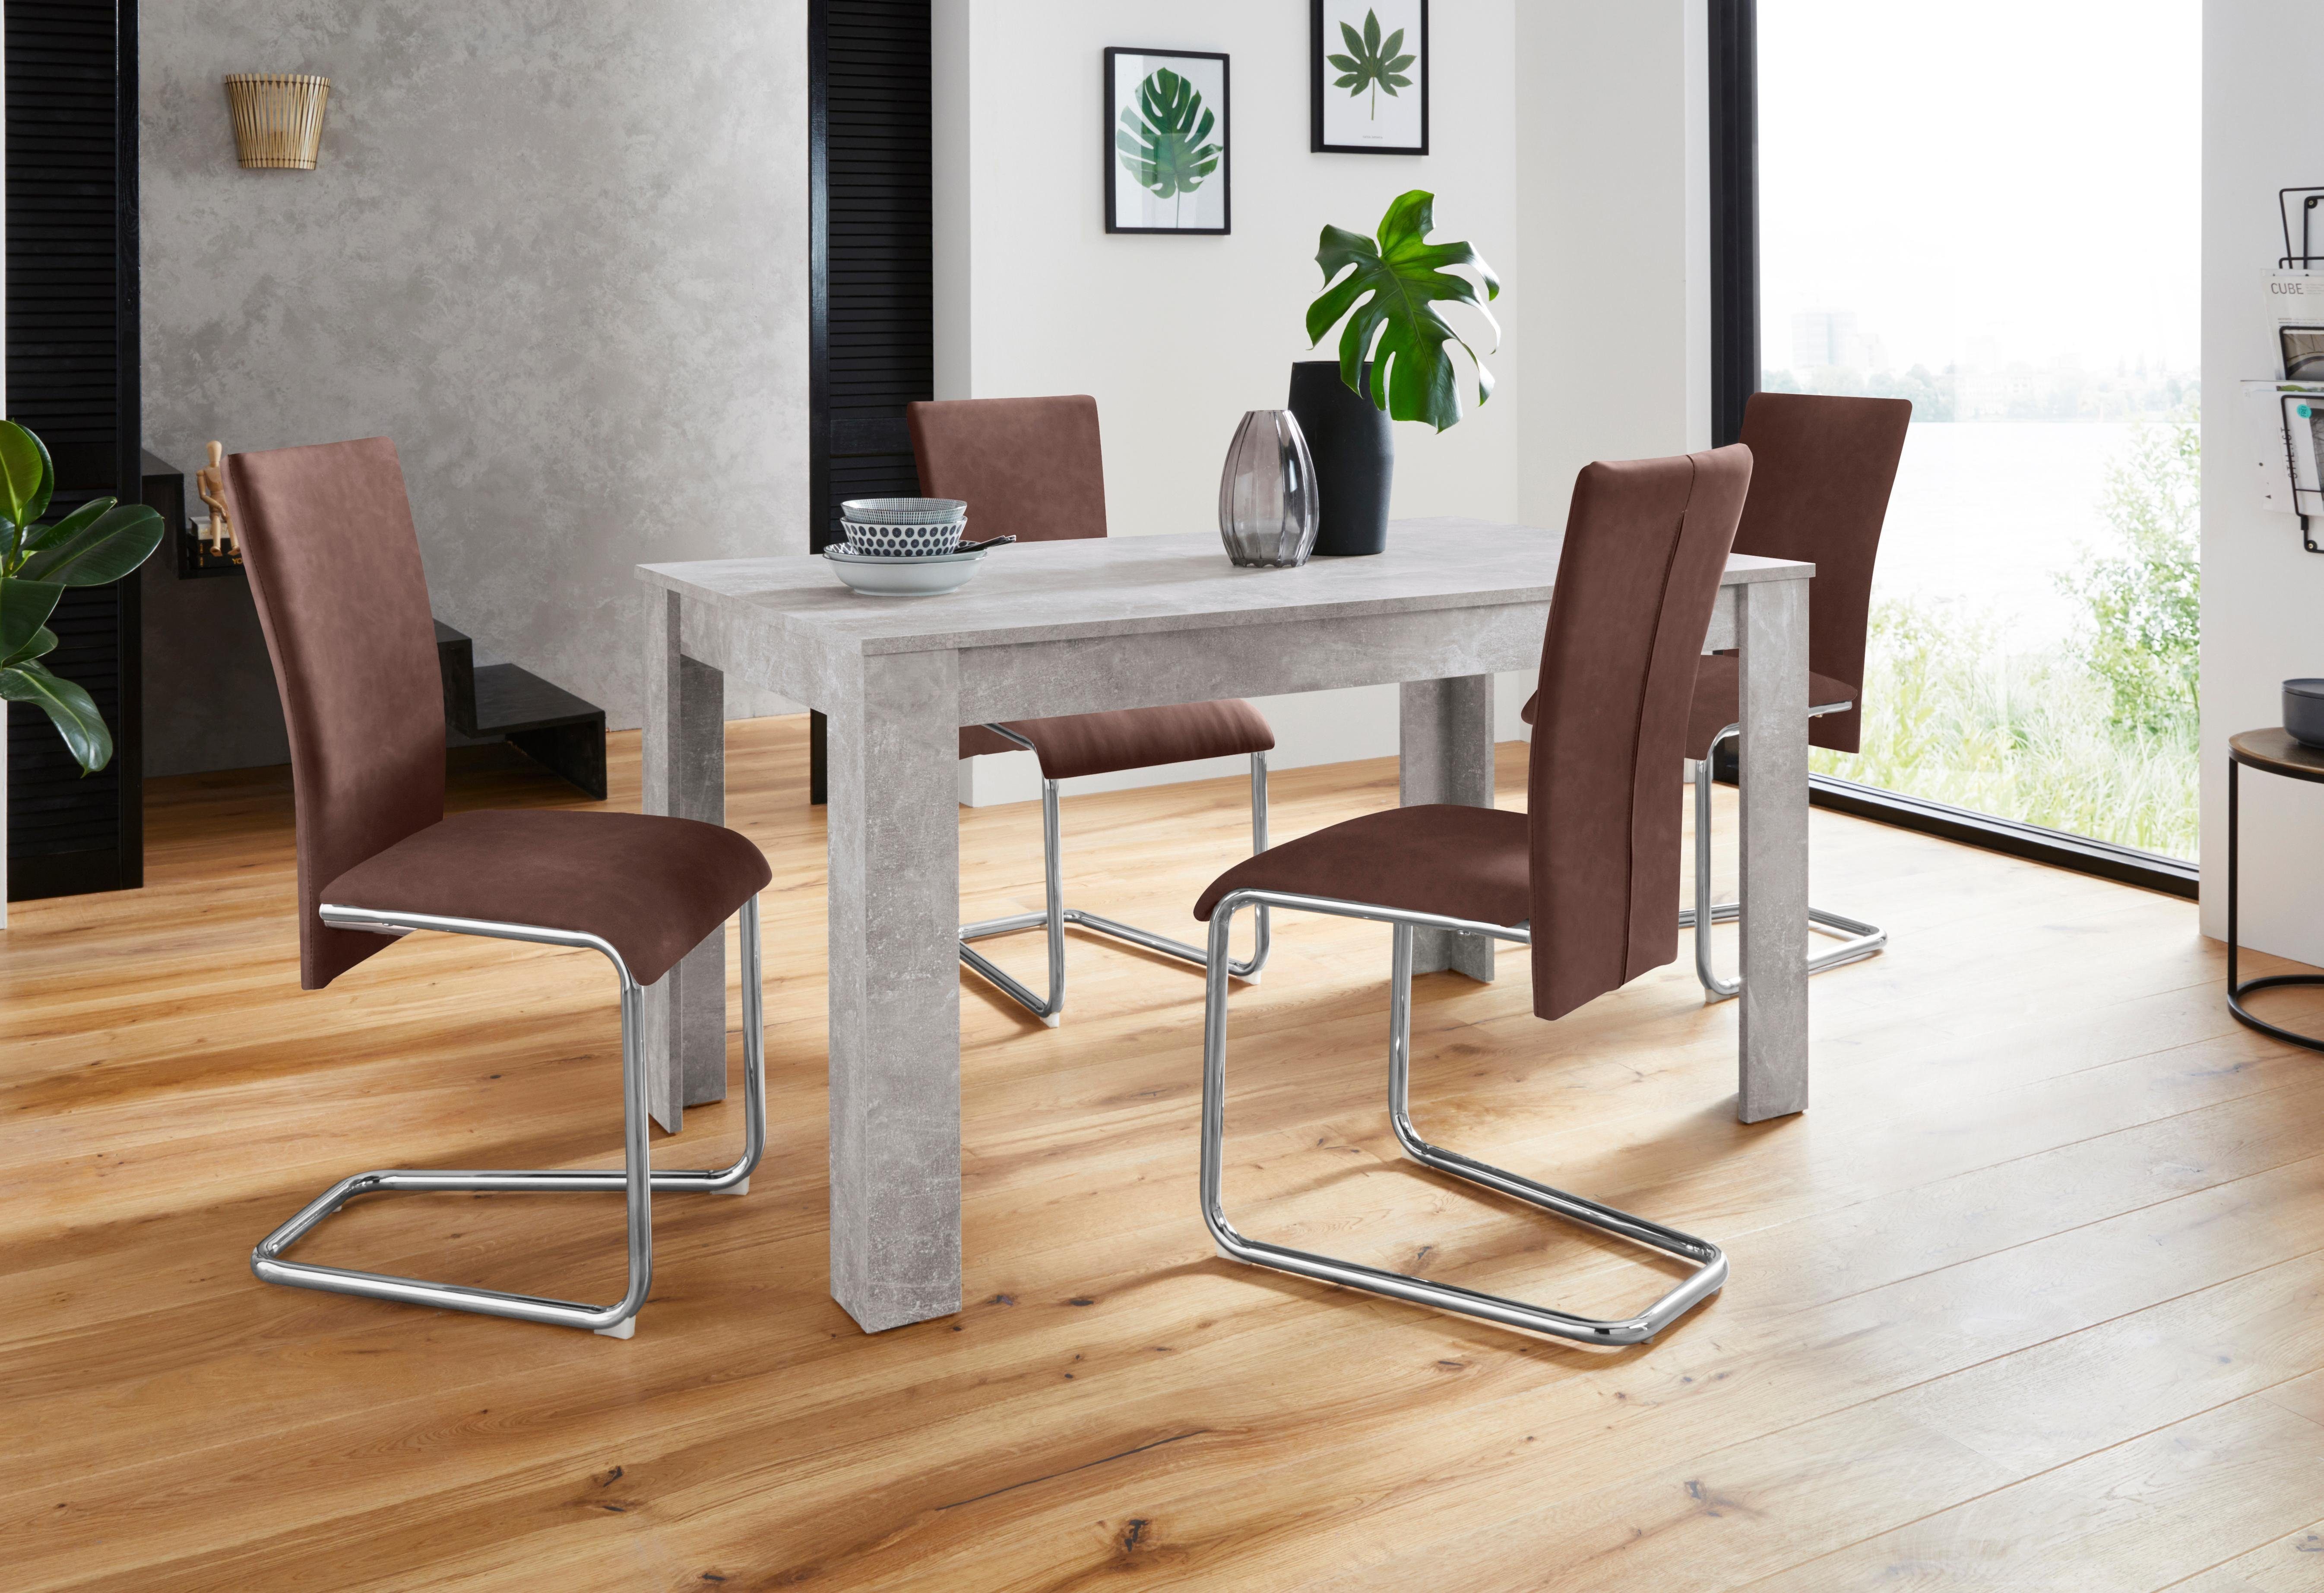 Homexperts Eethoek Nick3-Mulan met 4 stoelen, tafel in beton-look, breedte 140 cm (set, 5-delig - 5-delig)